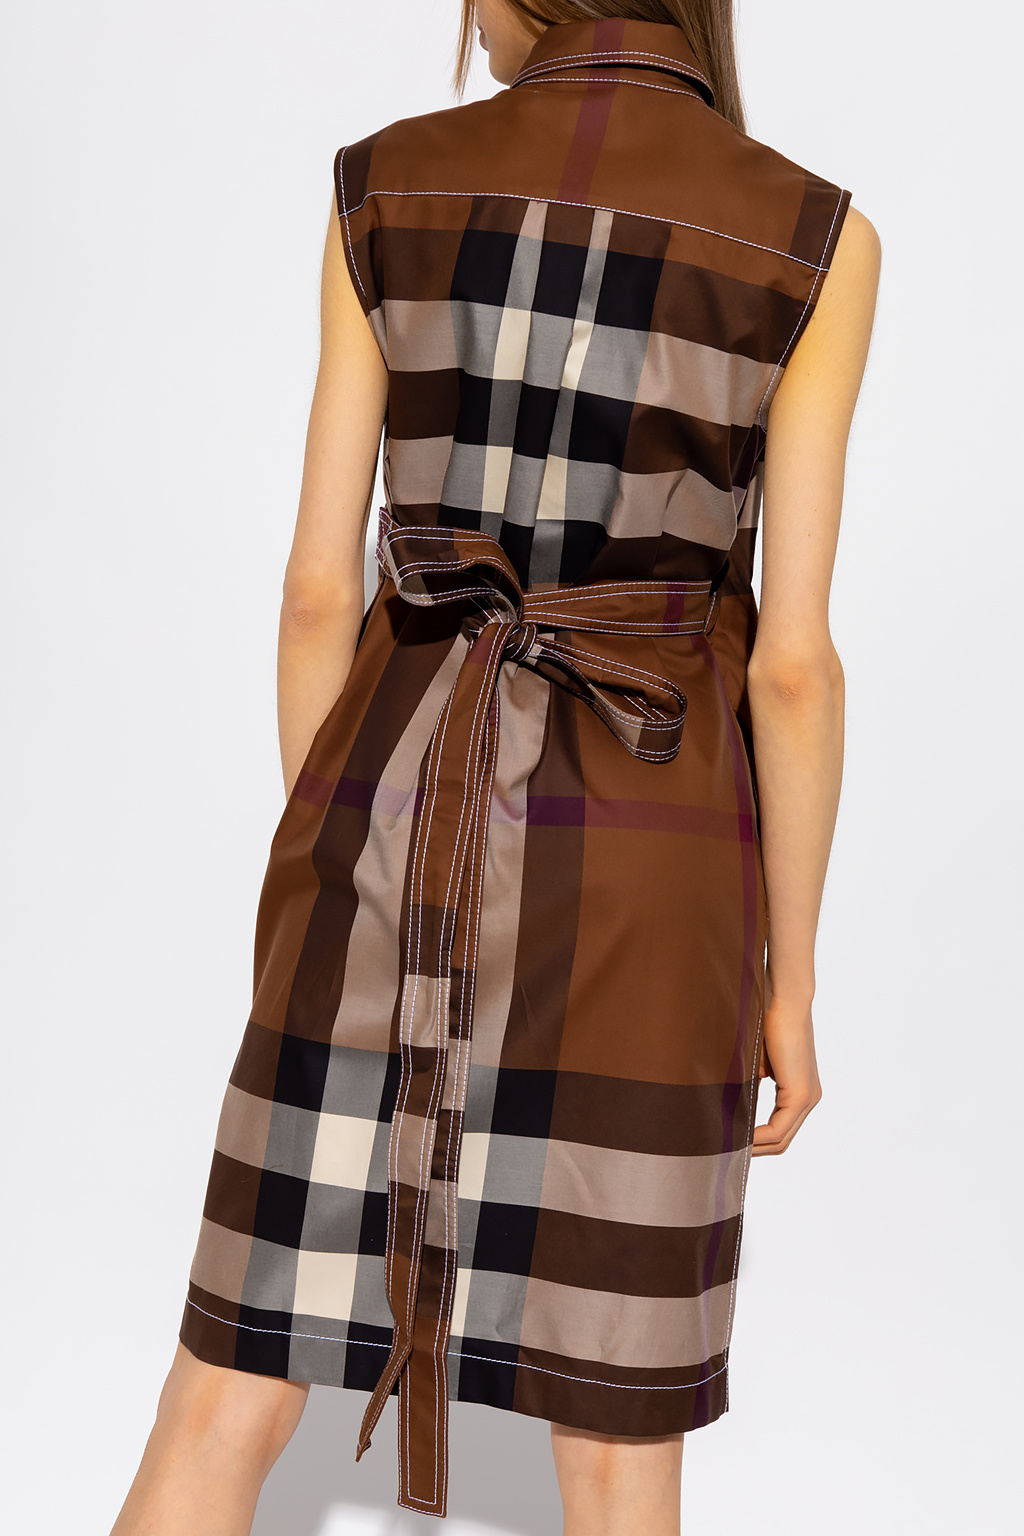 Burberry ‘Karla’ sleeveless dress